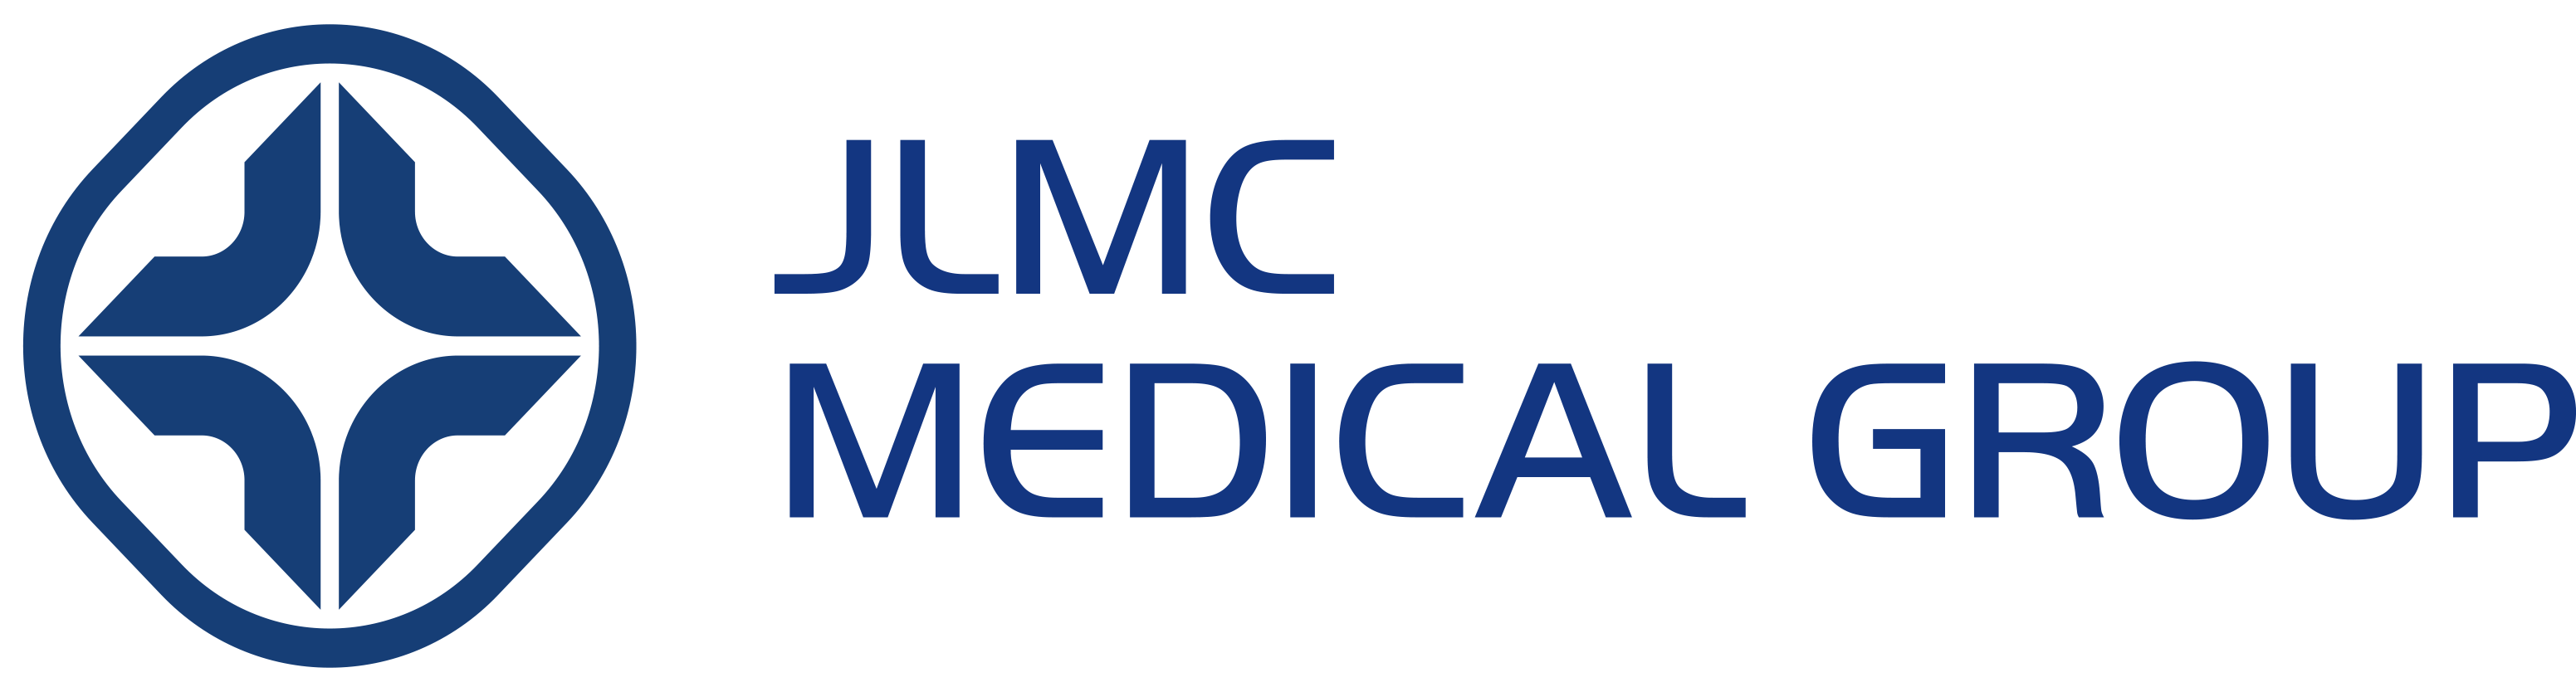 cifoplastia-jlmc-medical-group